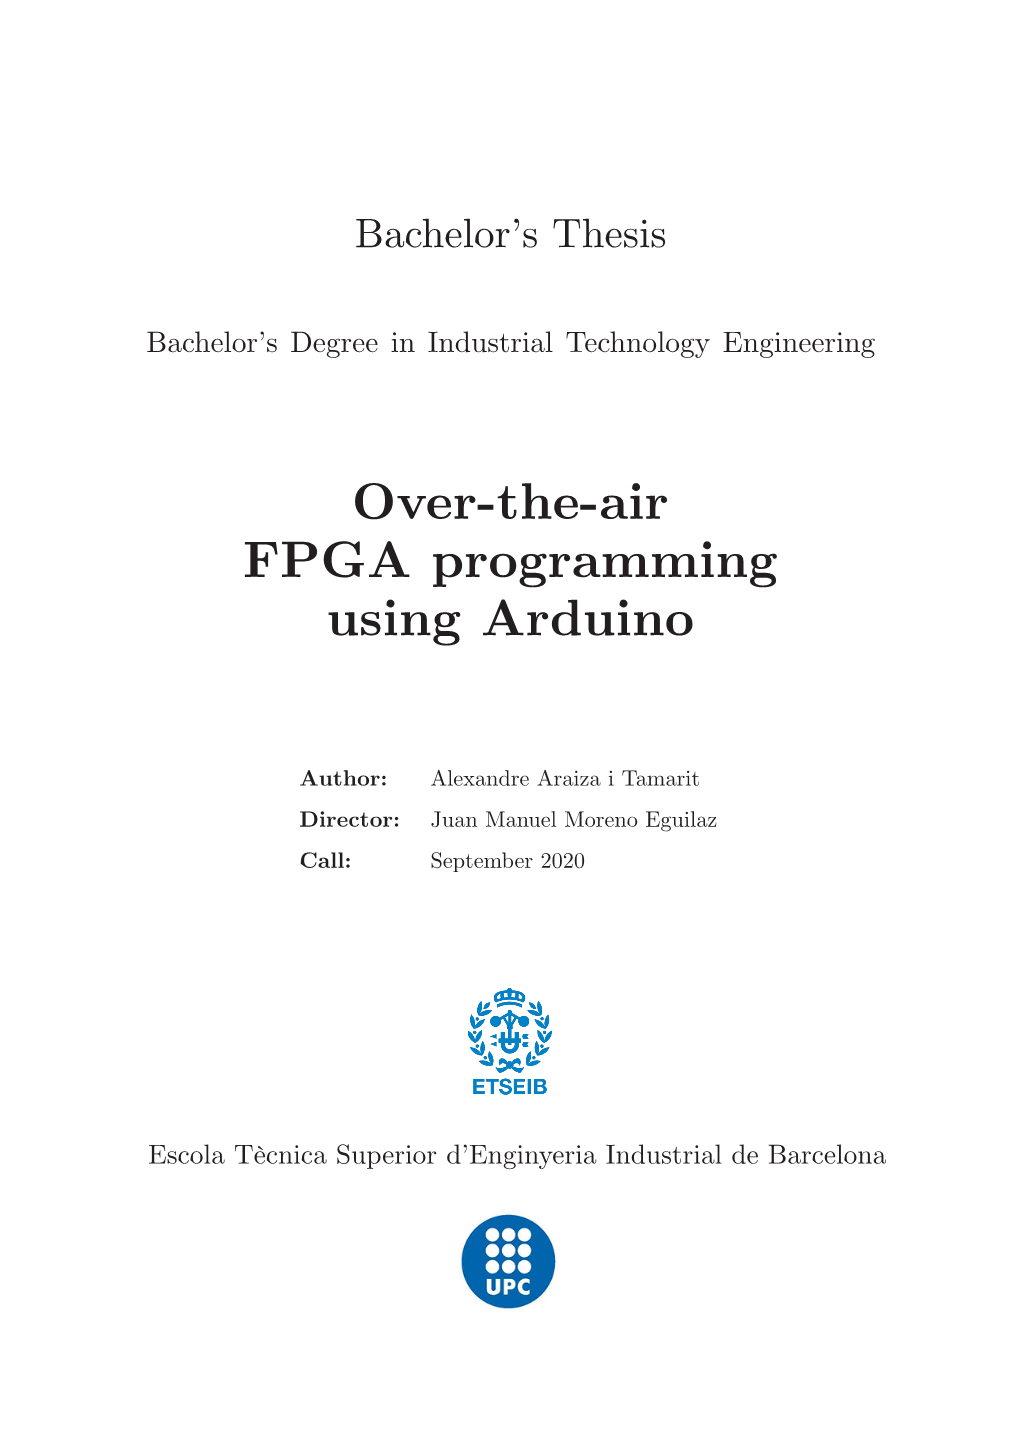 Over-The-Air FPGA Programming Using Arduino